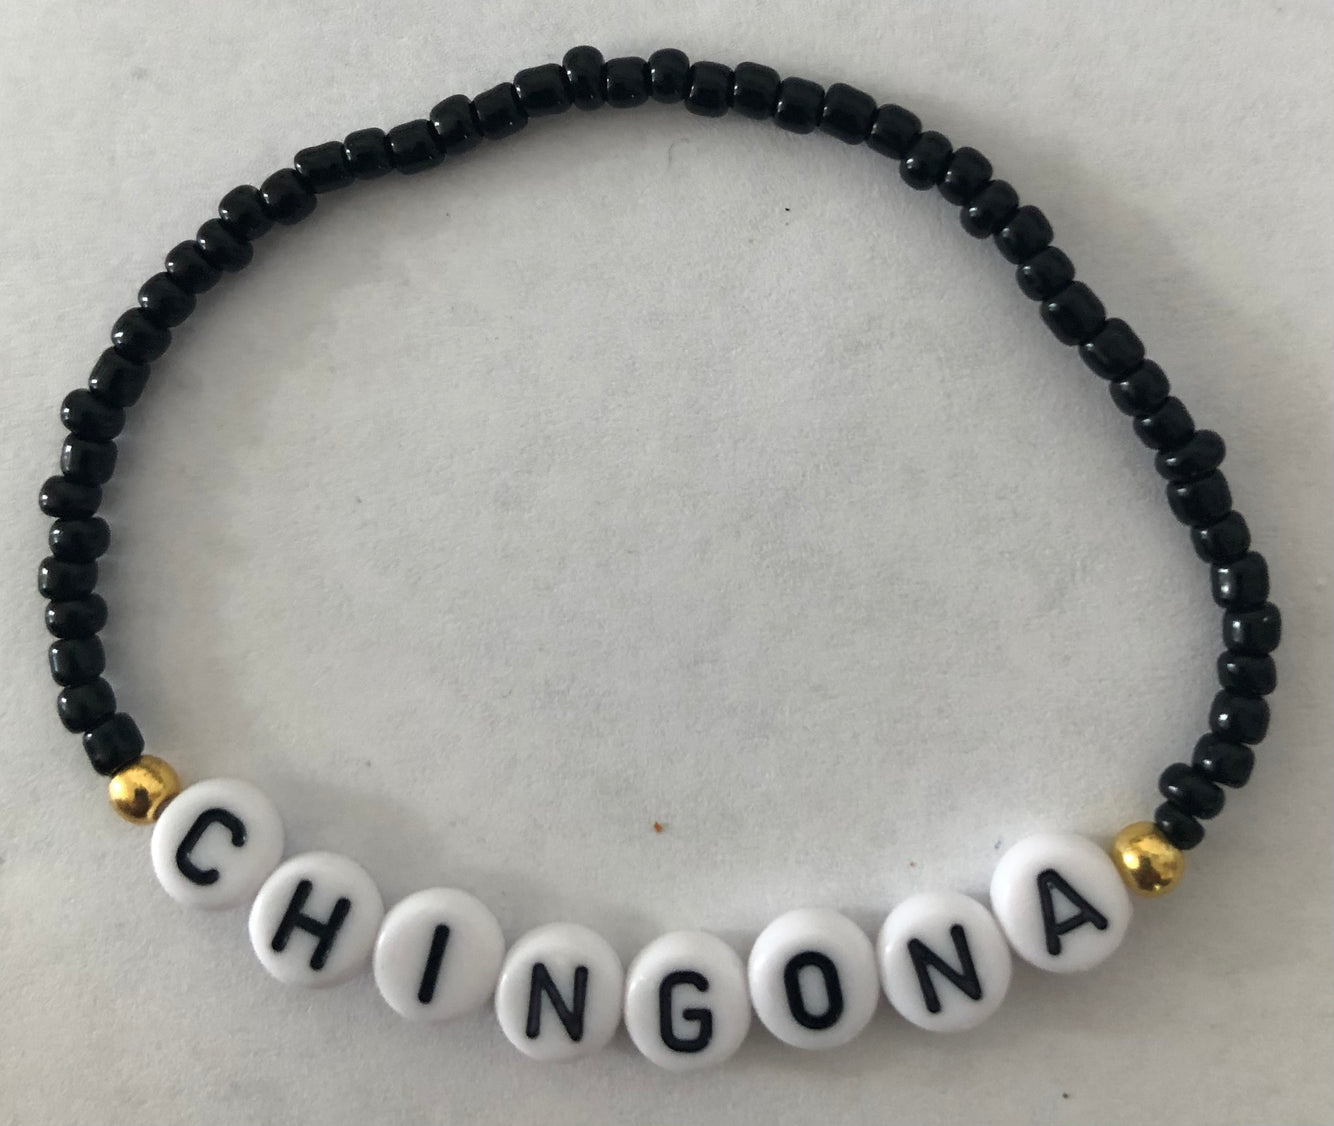 Chingona empowering bracelet